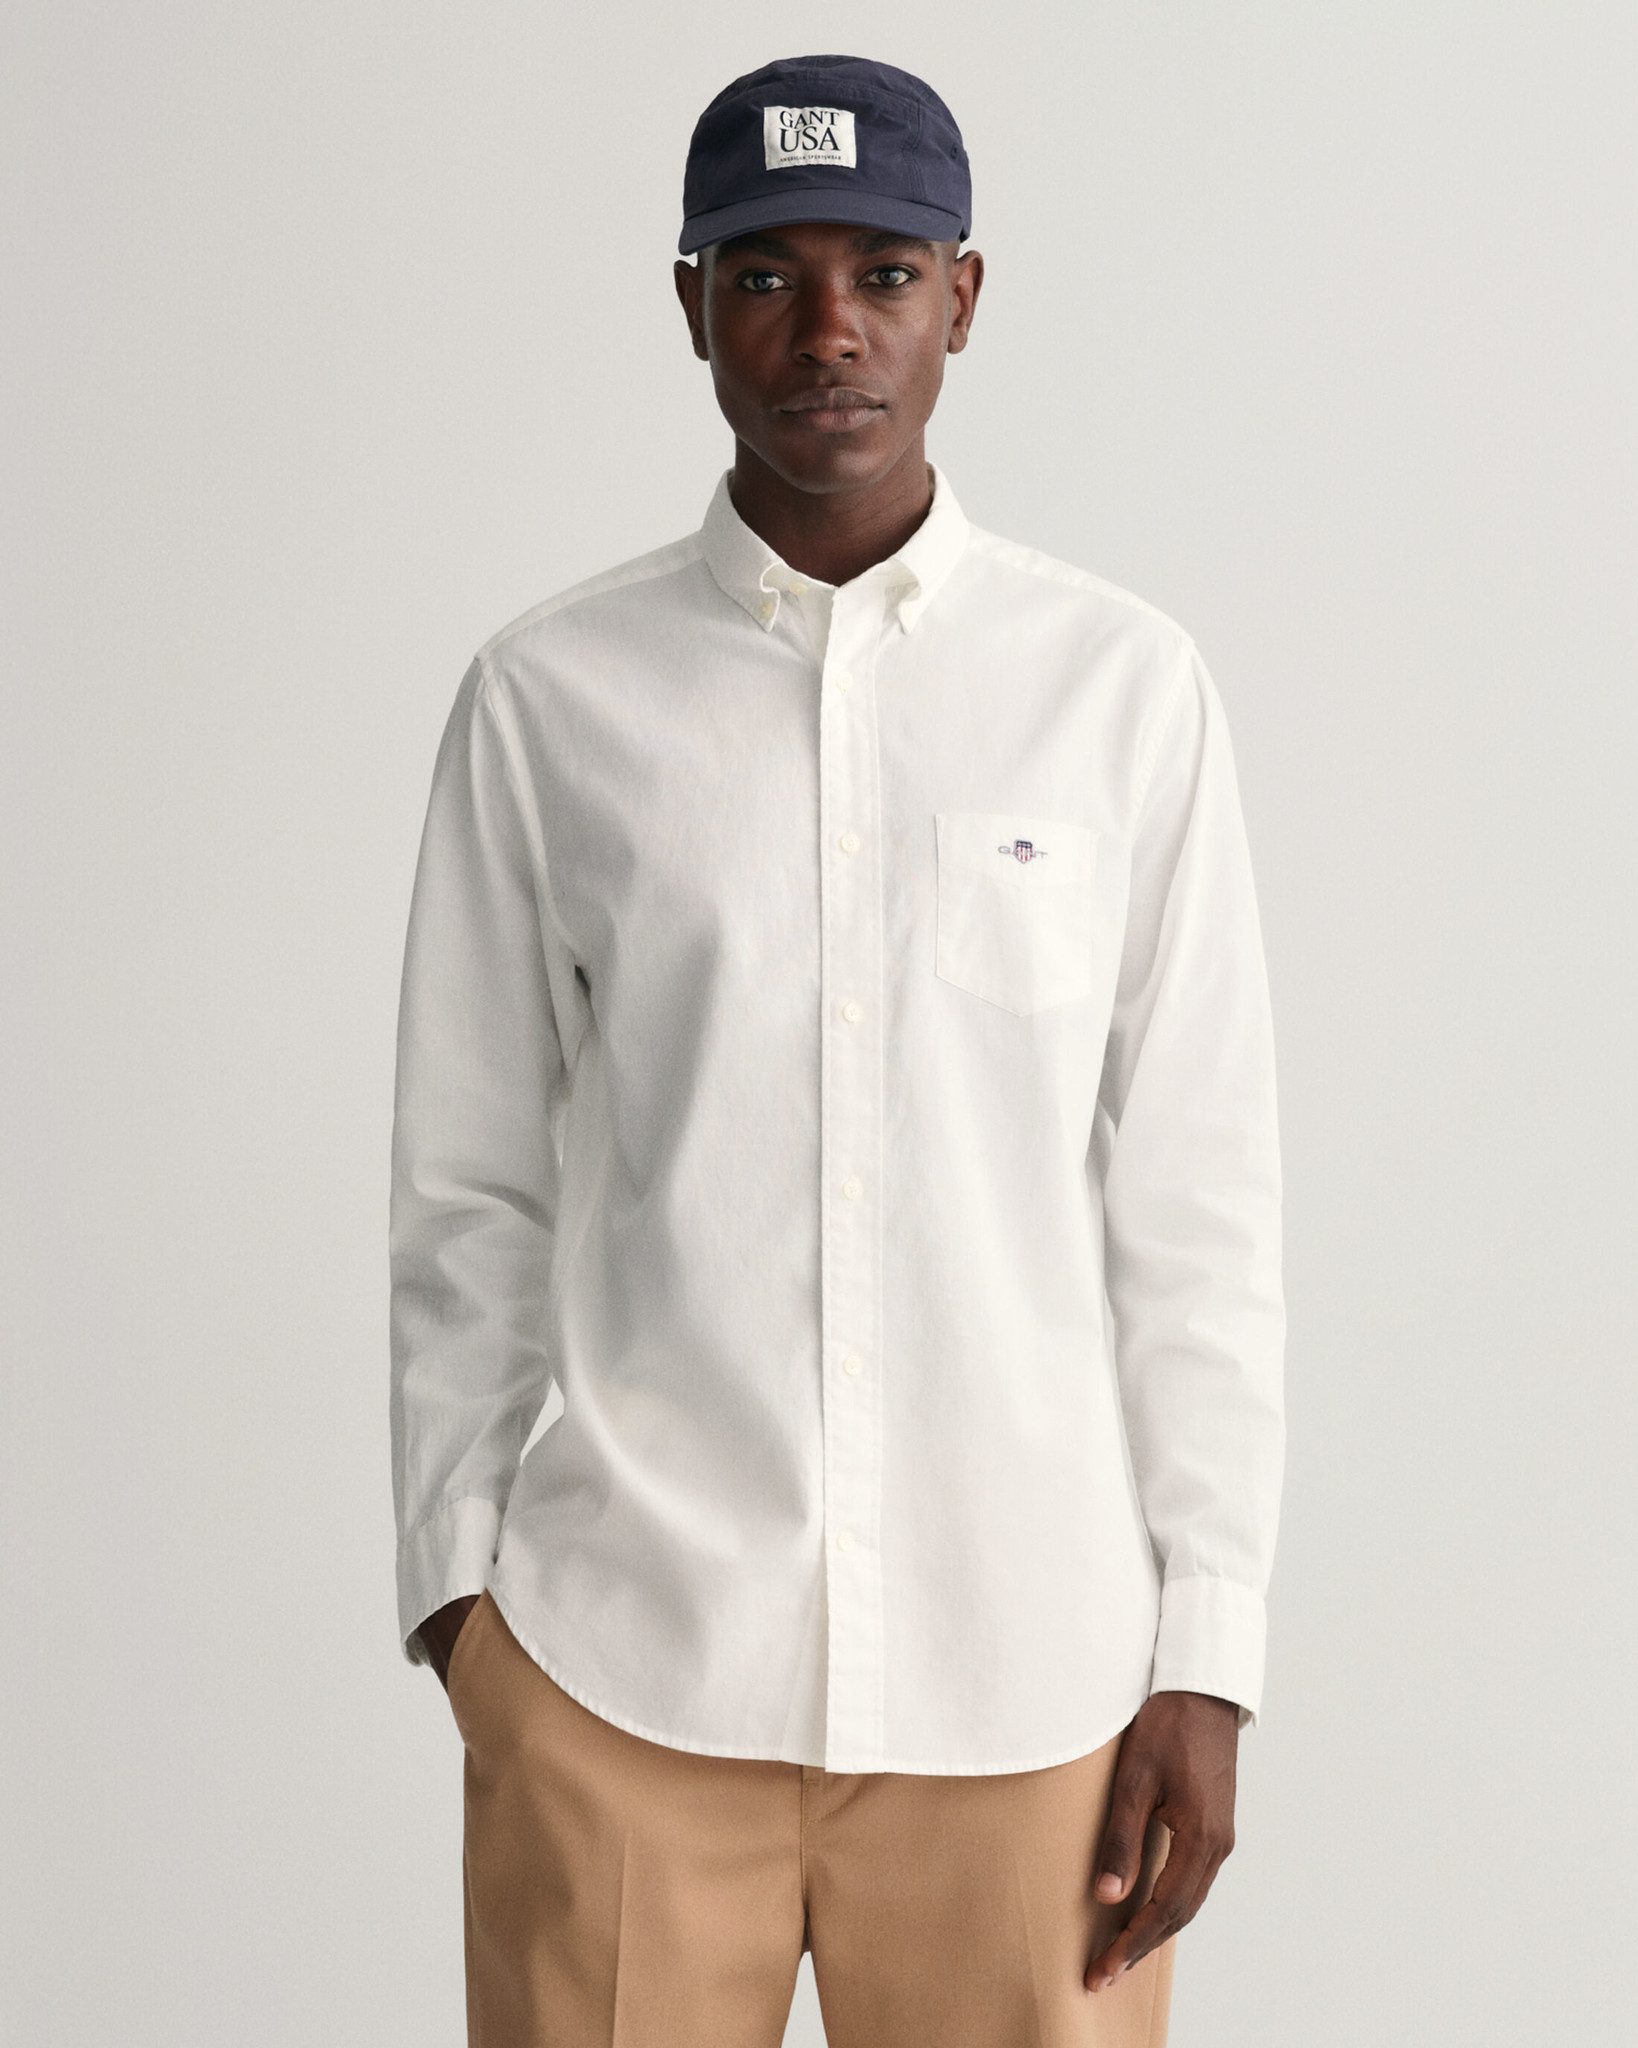 Voorganger Elk jaar Converteren Gant Reg Linen Shirt White - d'Oude Seylmakerij - Watersport, Fashion and  Holiday store